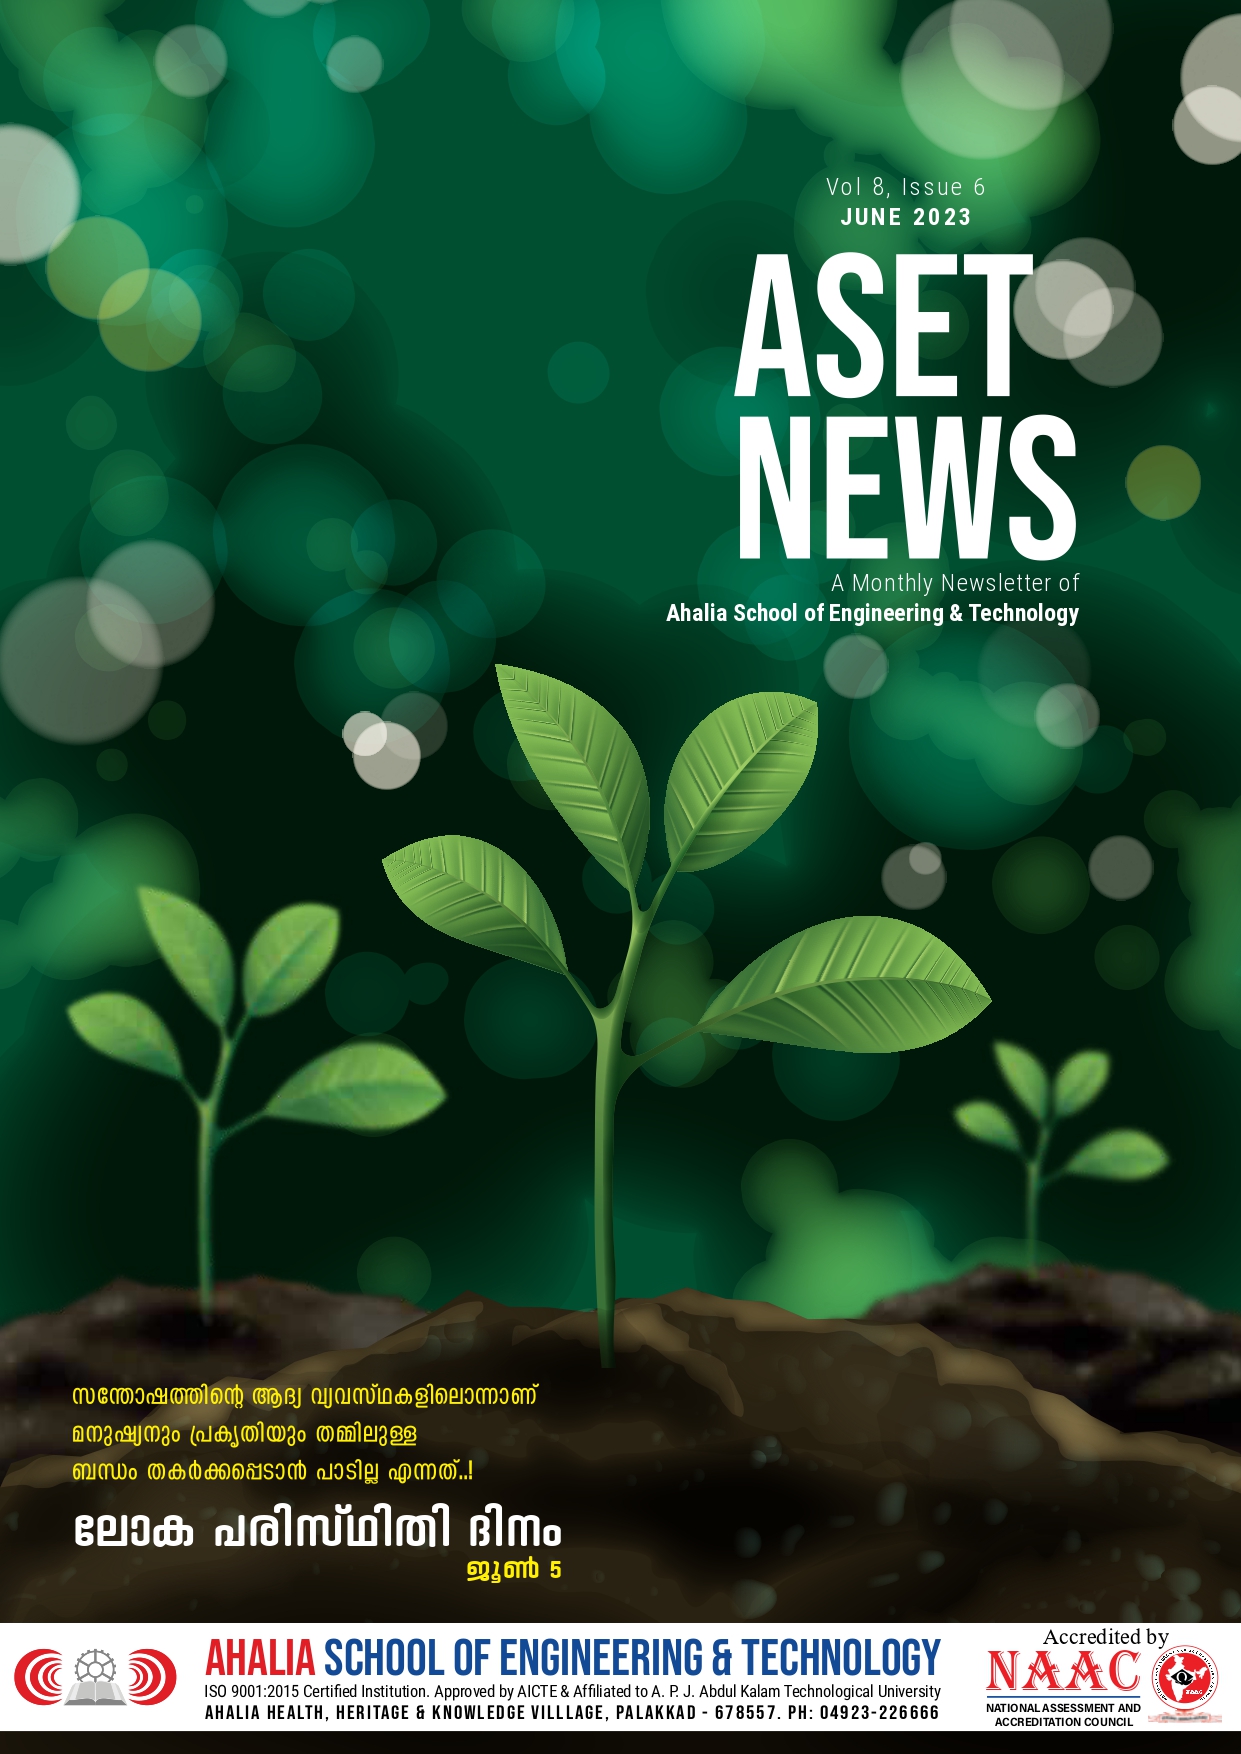 June 2023 ASET NEWS Released